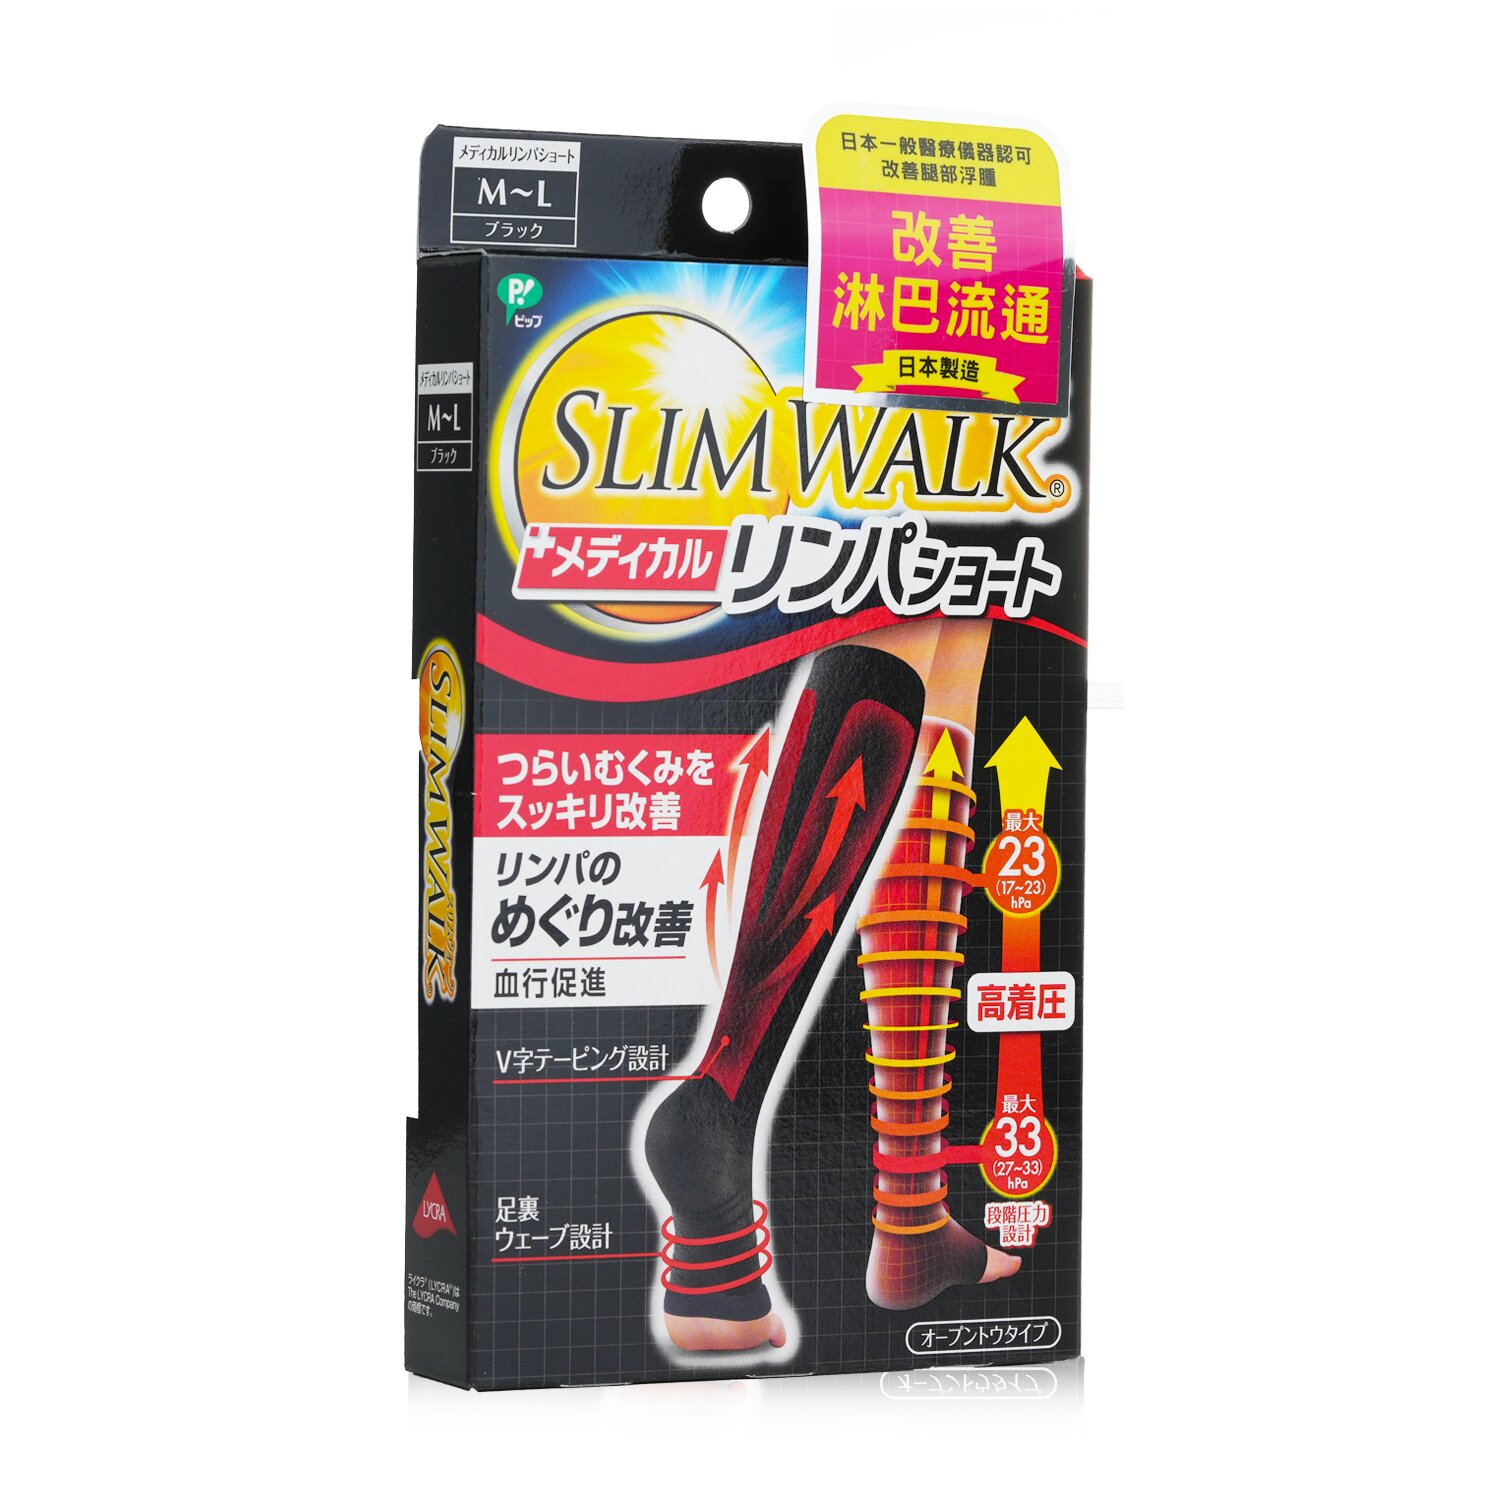 SlimWalk Compression Medical Lymphatic Open-Toe Socks, Short Type 1pair